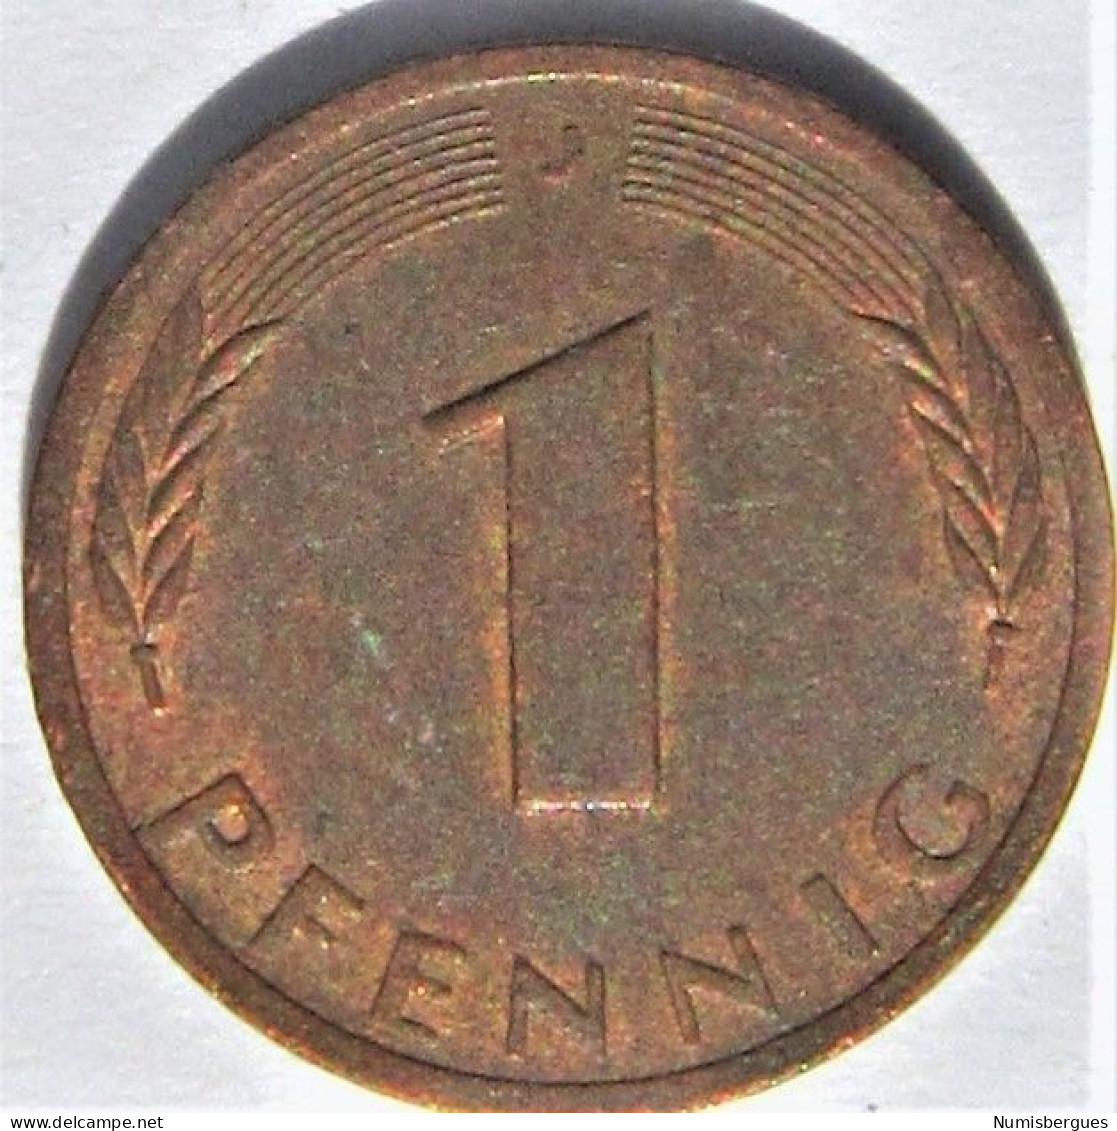 Pièce De Monnaie 1 Pfennig 1981 J (2) - 1 Pfennig